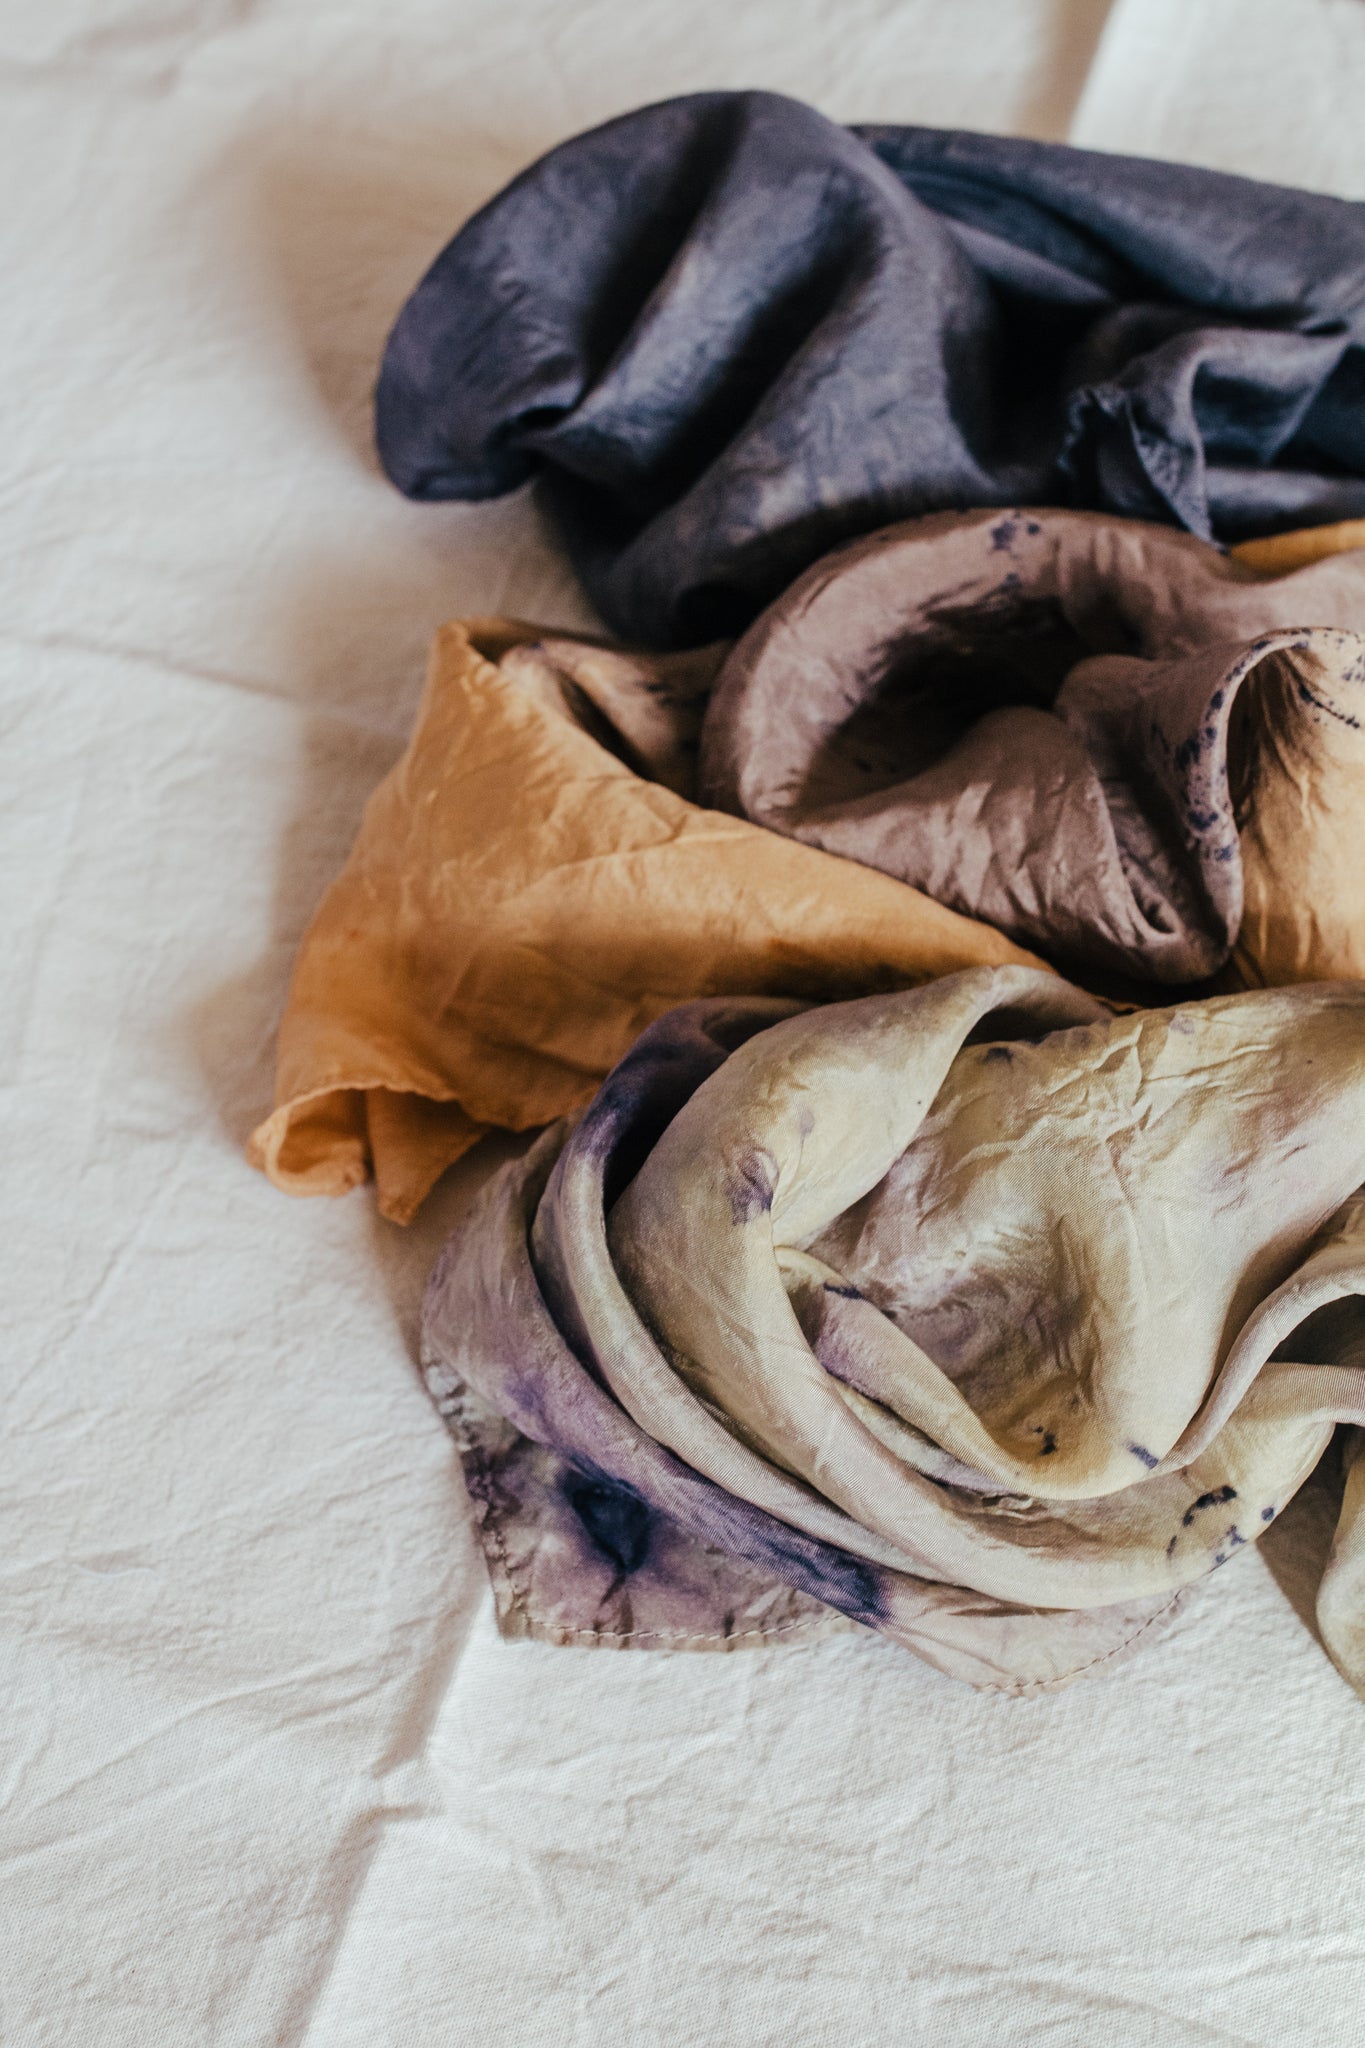 9 Ways To Tie A Silk Scarf, COLOR By K